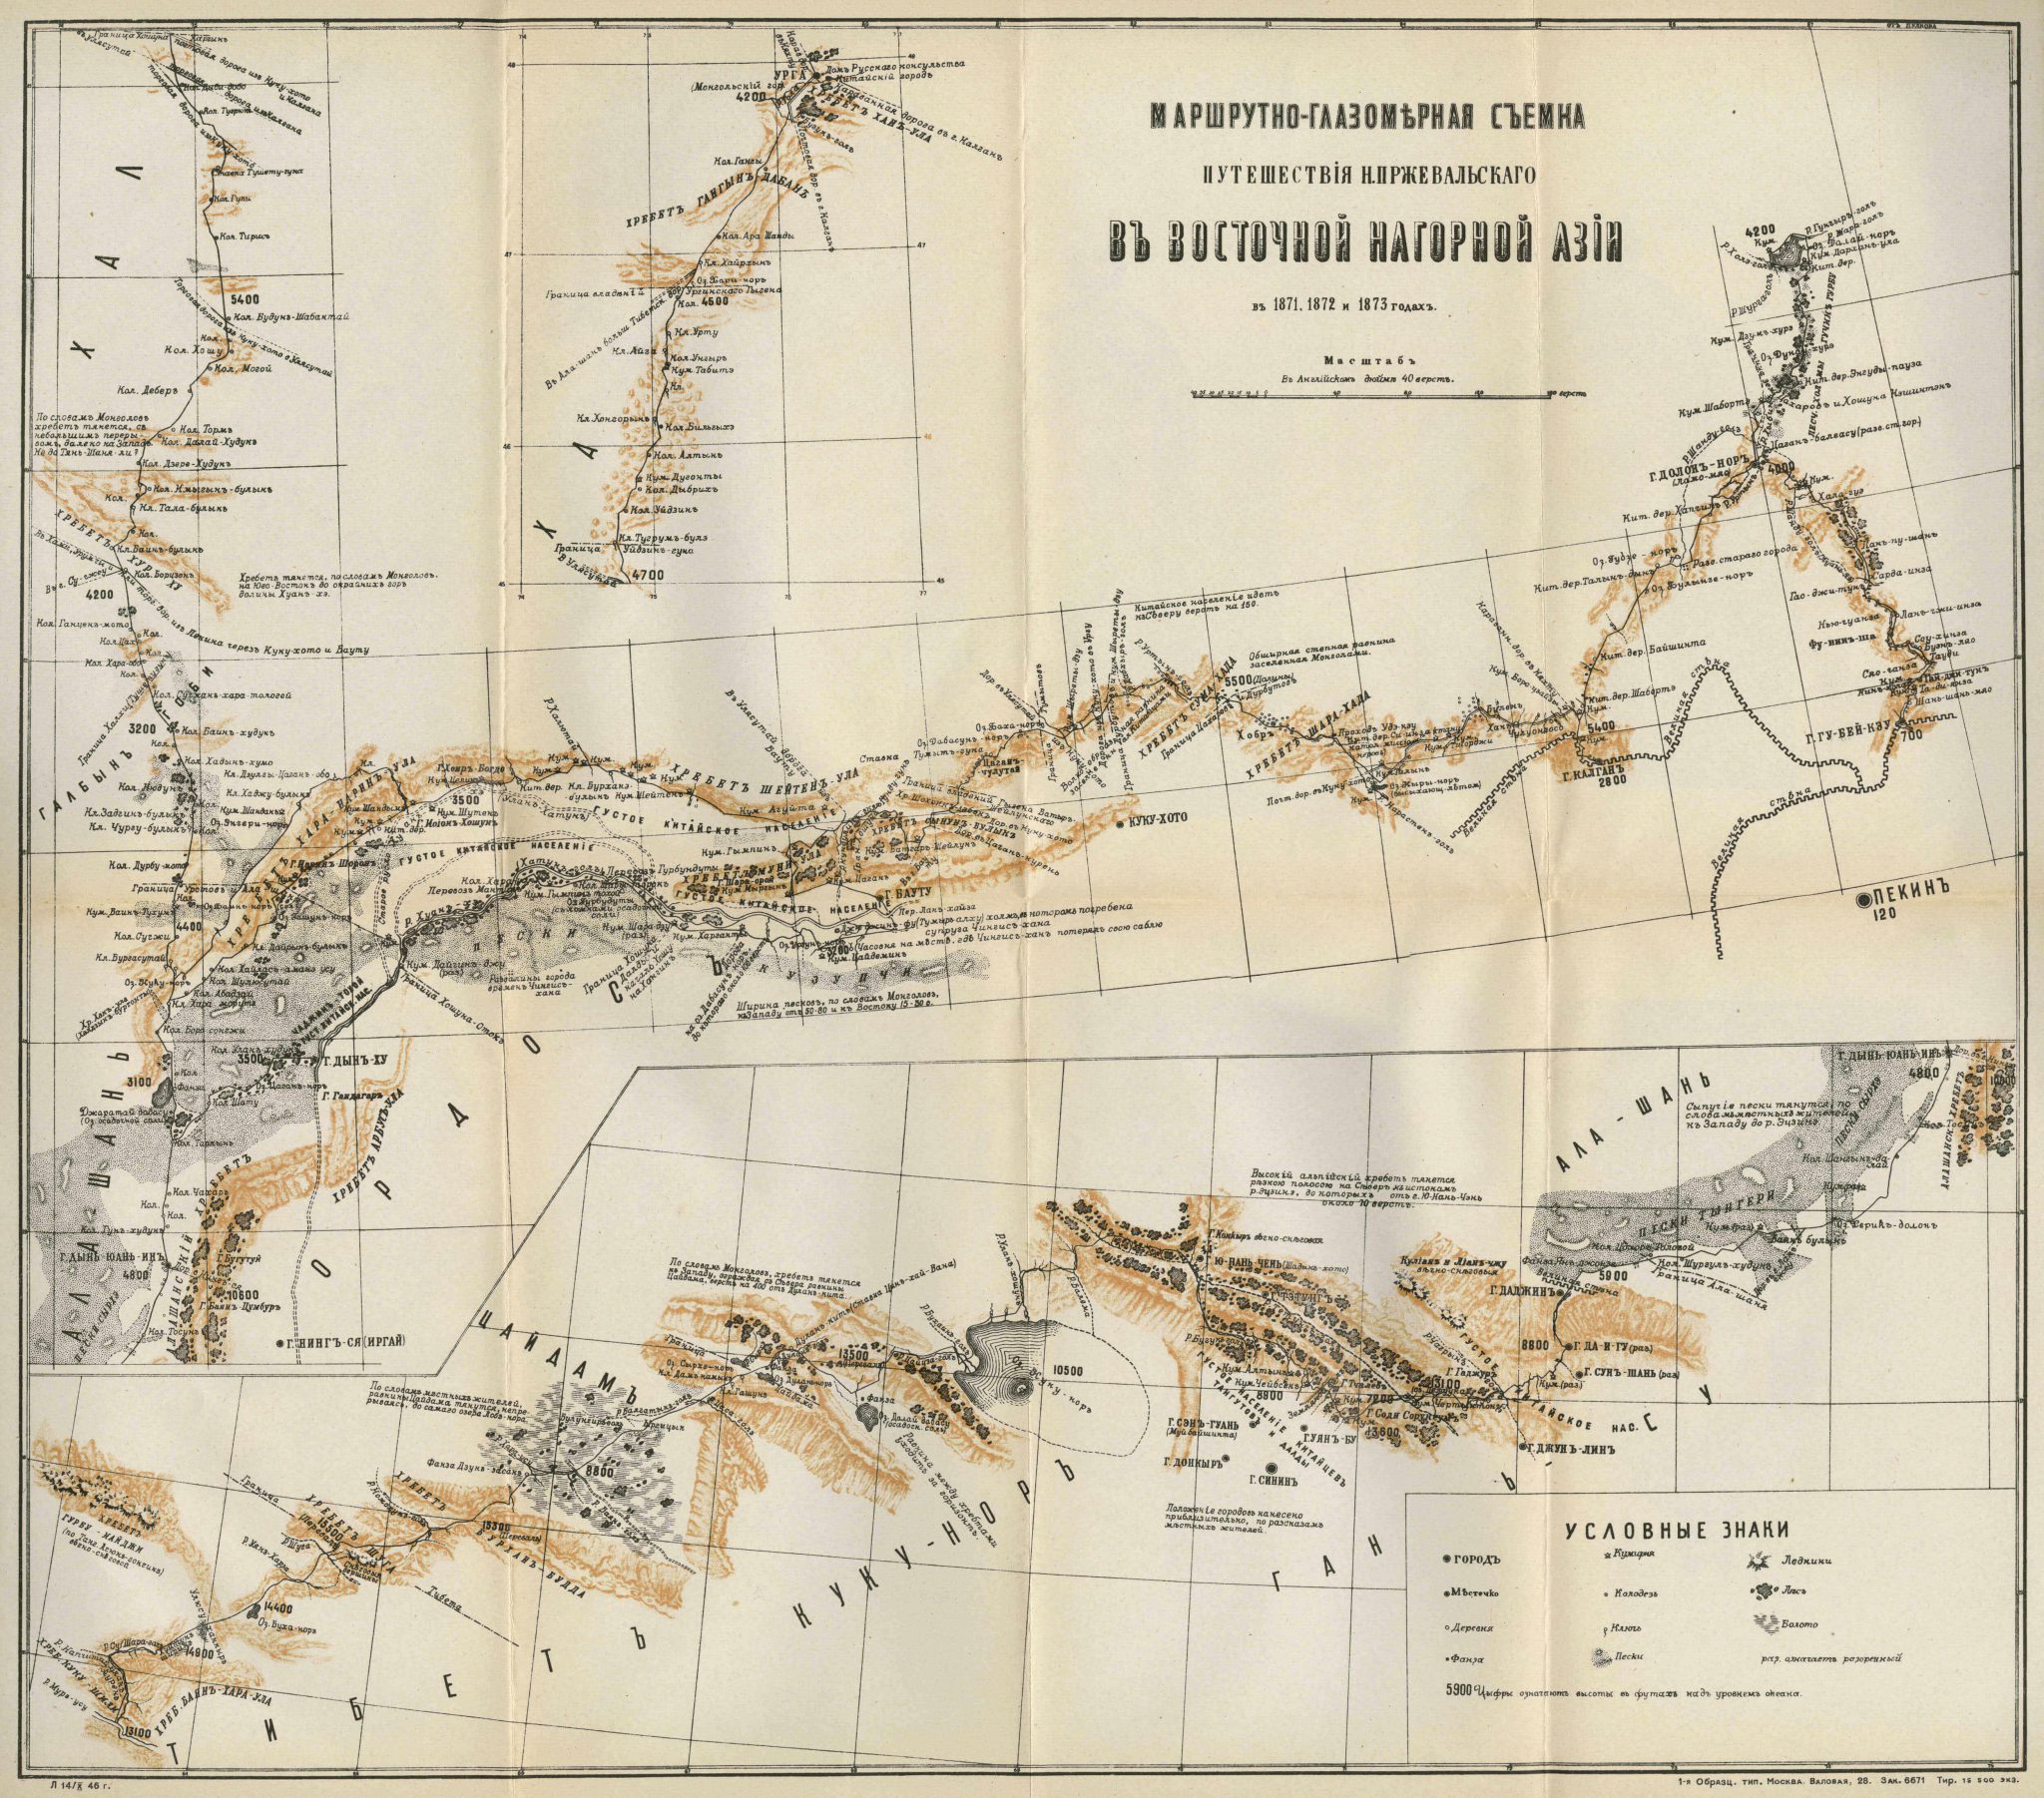 Przevalskij’s expedition to East Asia, 1871-1873